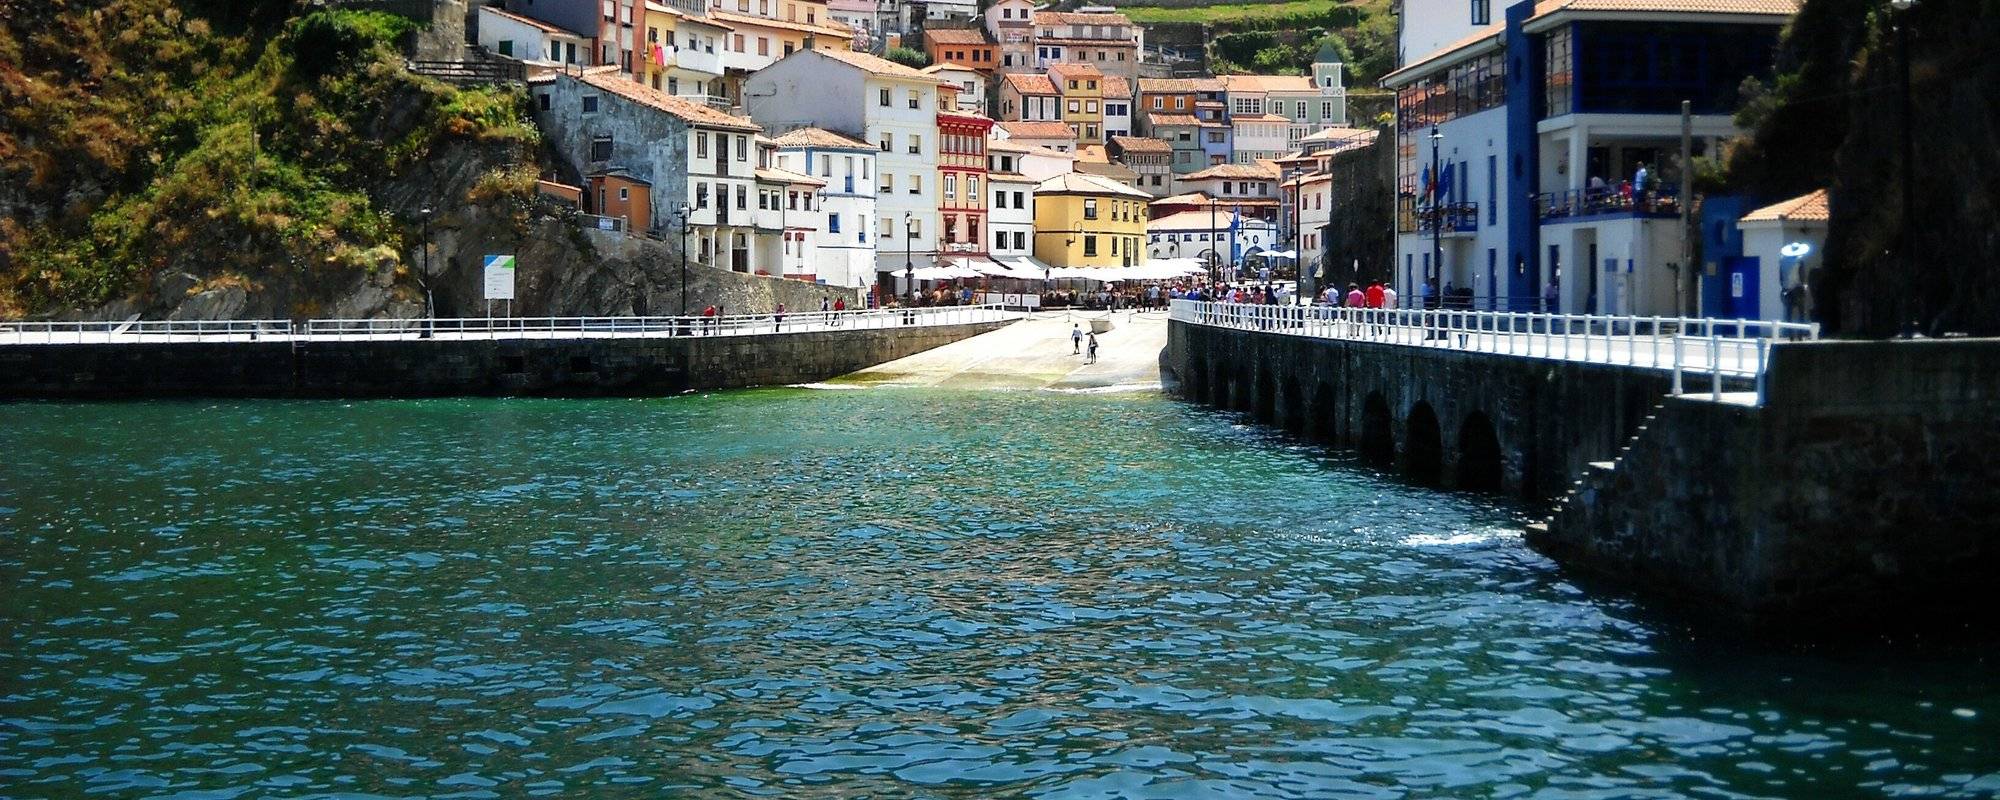 Villages in Asturias, Spain: Cudillero